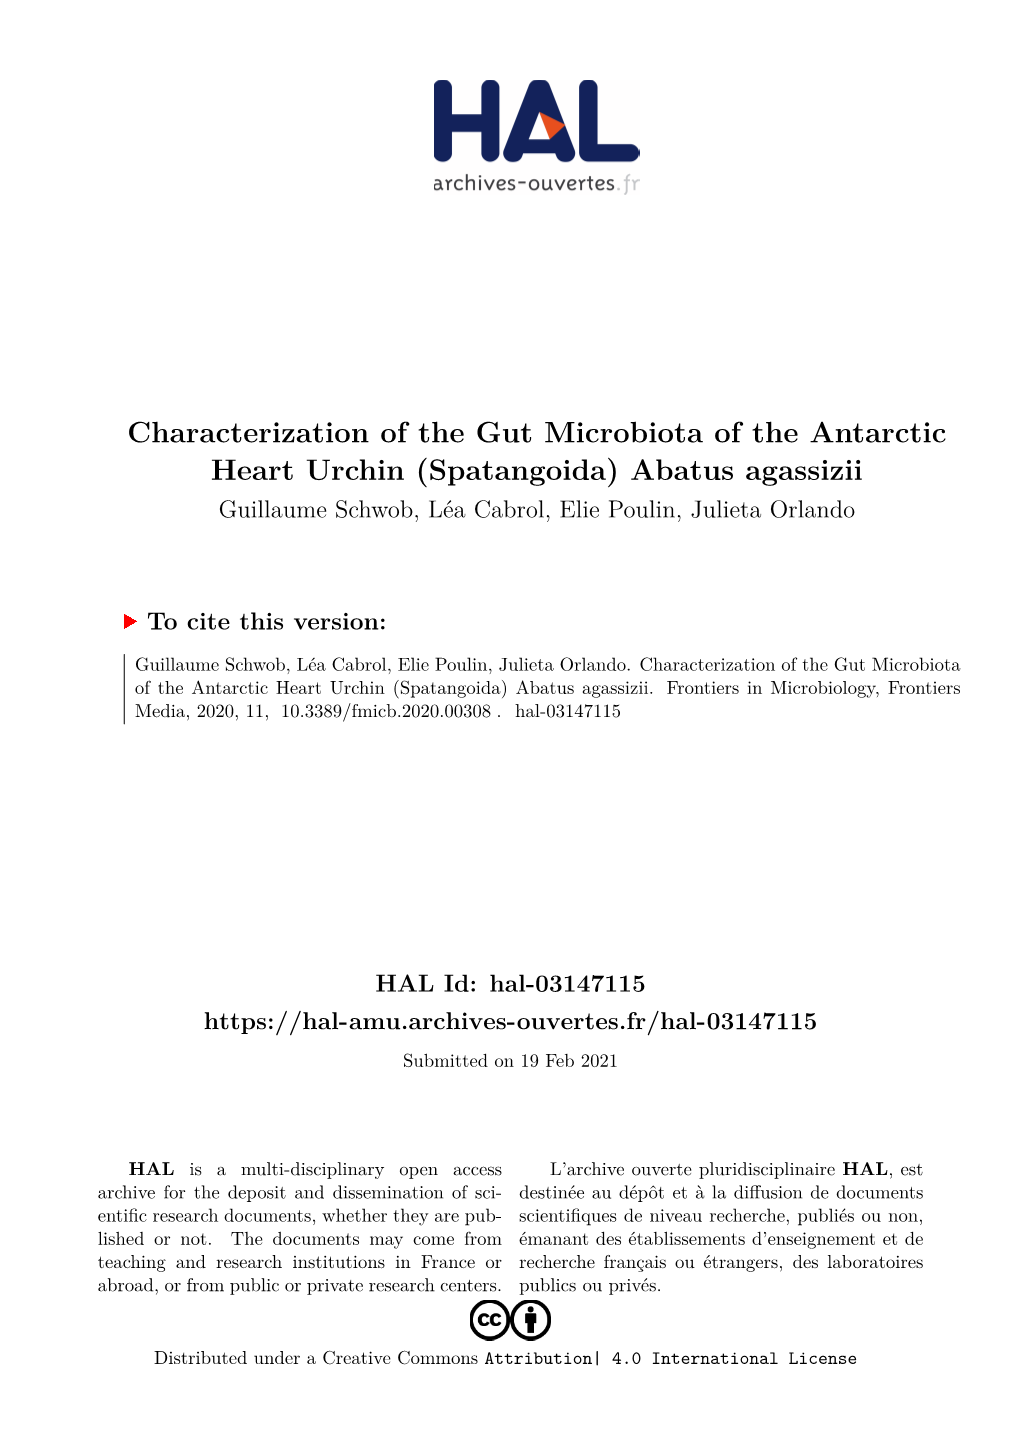 Characterization of the Gut Microbiota of the Antarctic Heart Urchin (Spatangoida) Abatus Agassizii Guillaume Schwob, Léa Cabrol, Elie Poulin, Julieta Orlando